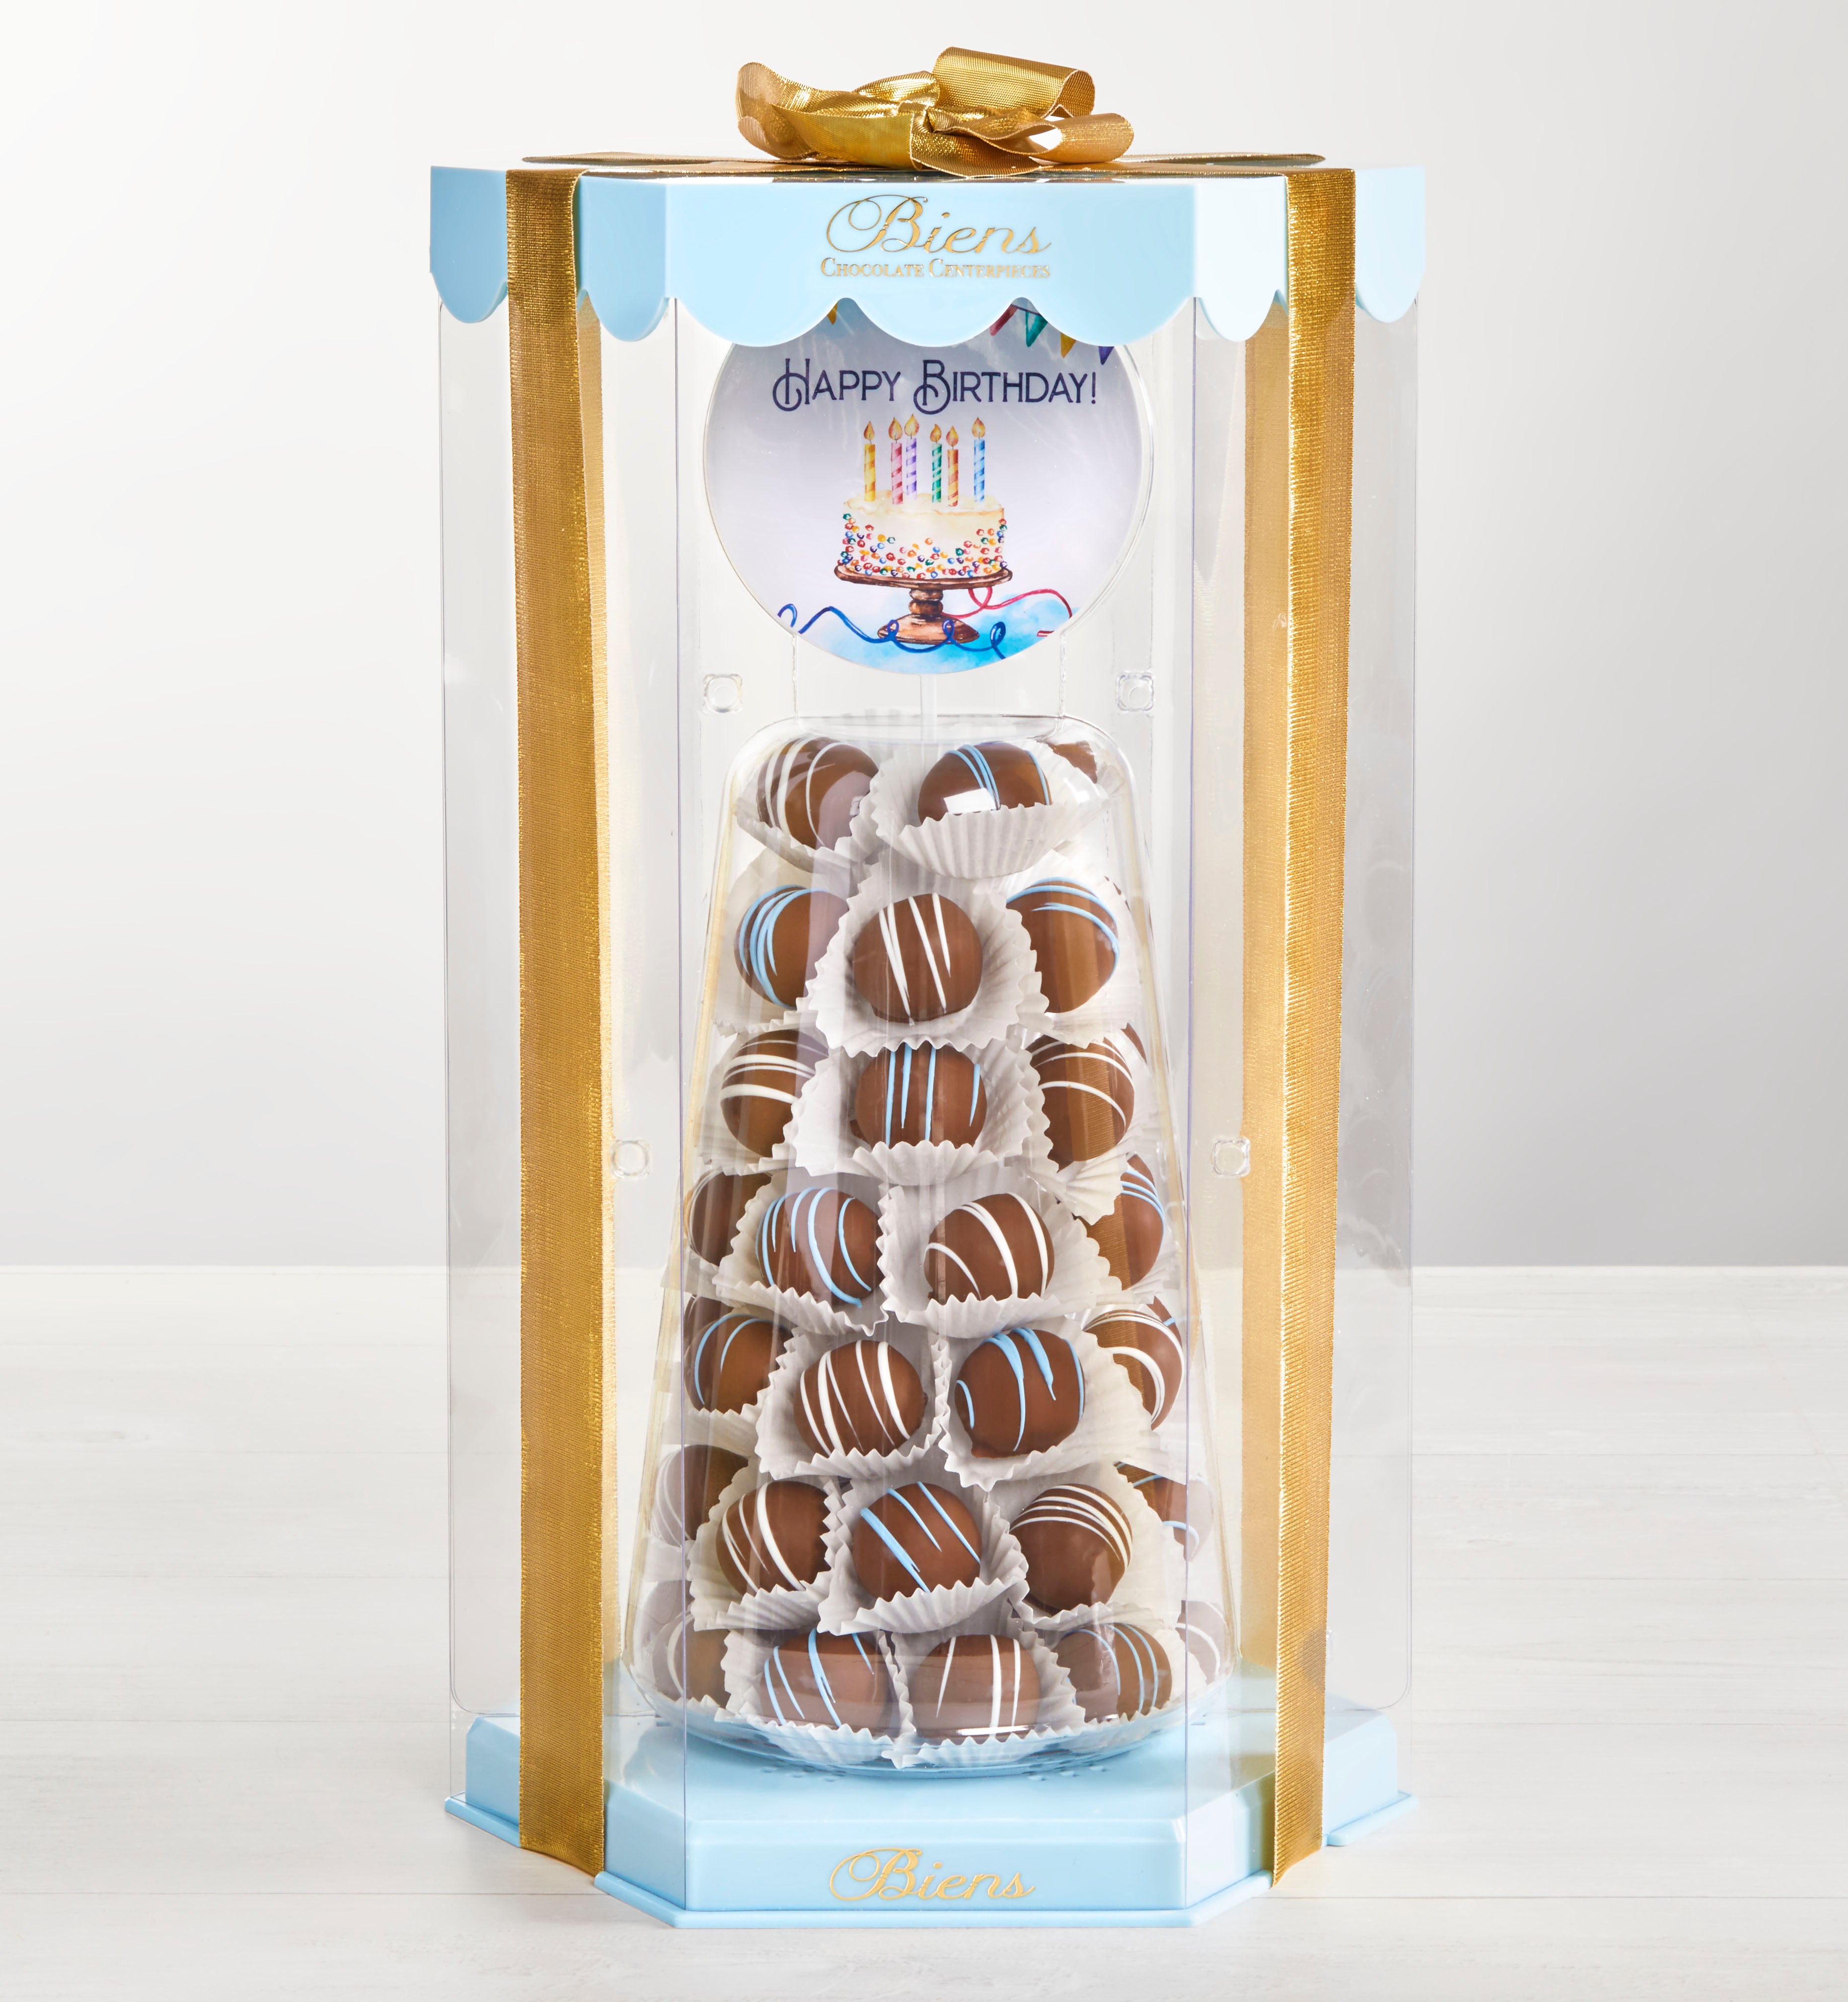 Biens Chocolate Happy Birthday Truffle Tower